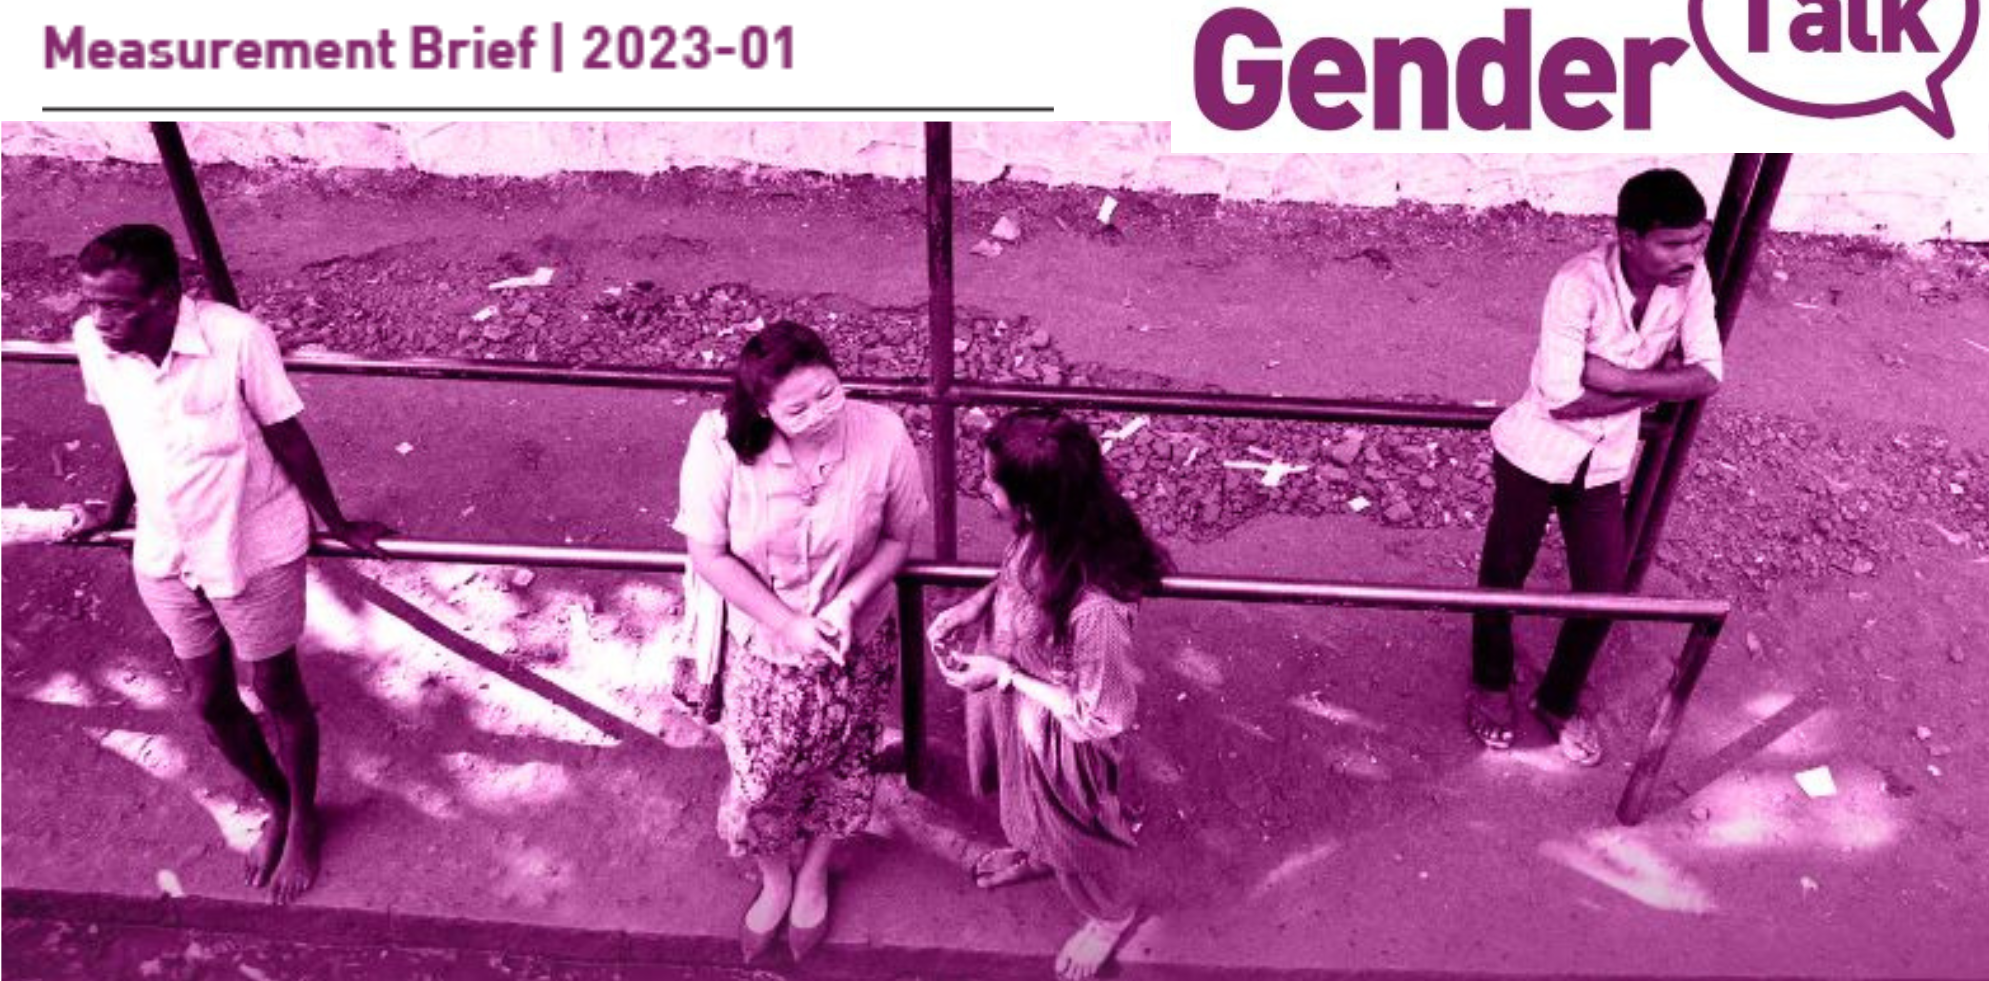 Gender Talk | NDIC Measurement Brief | 2023-01